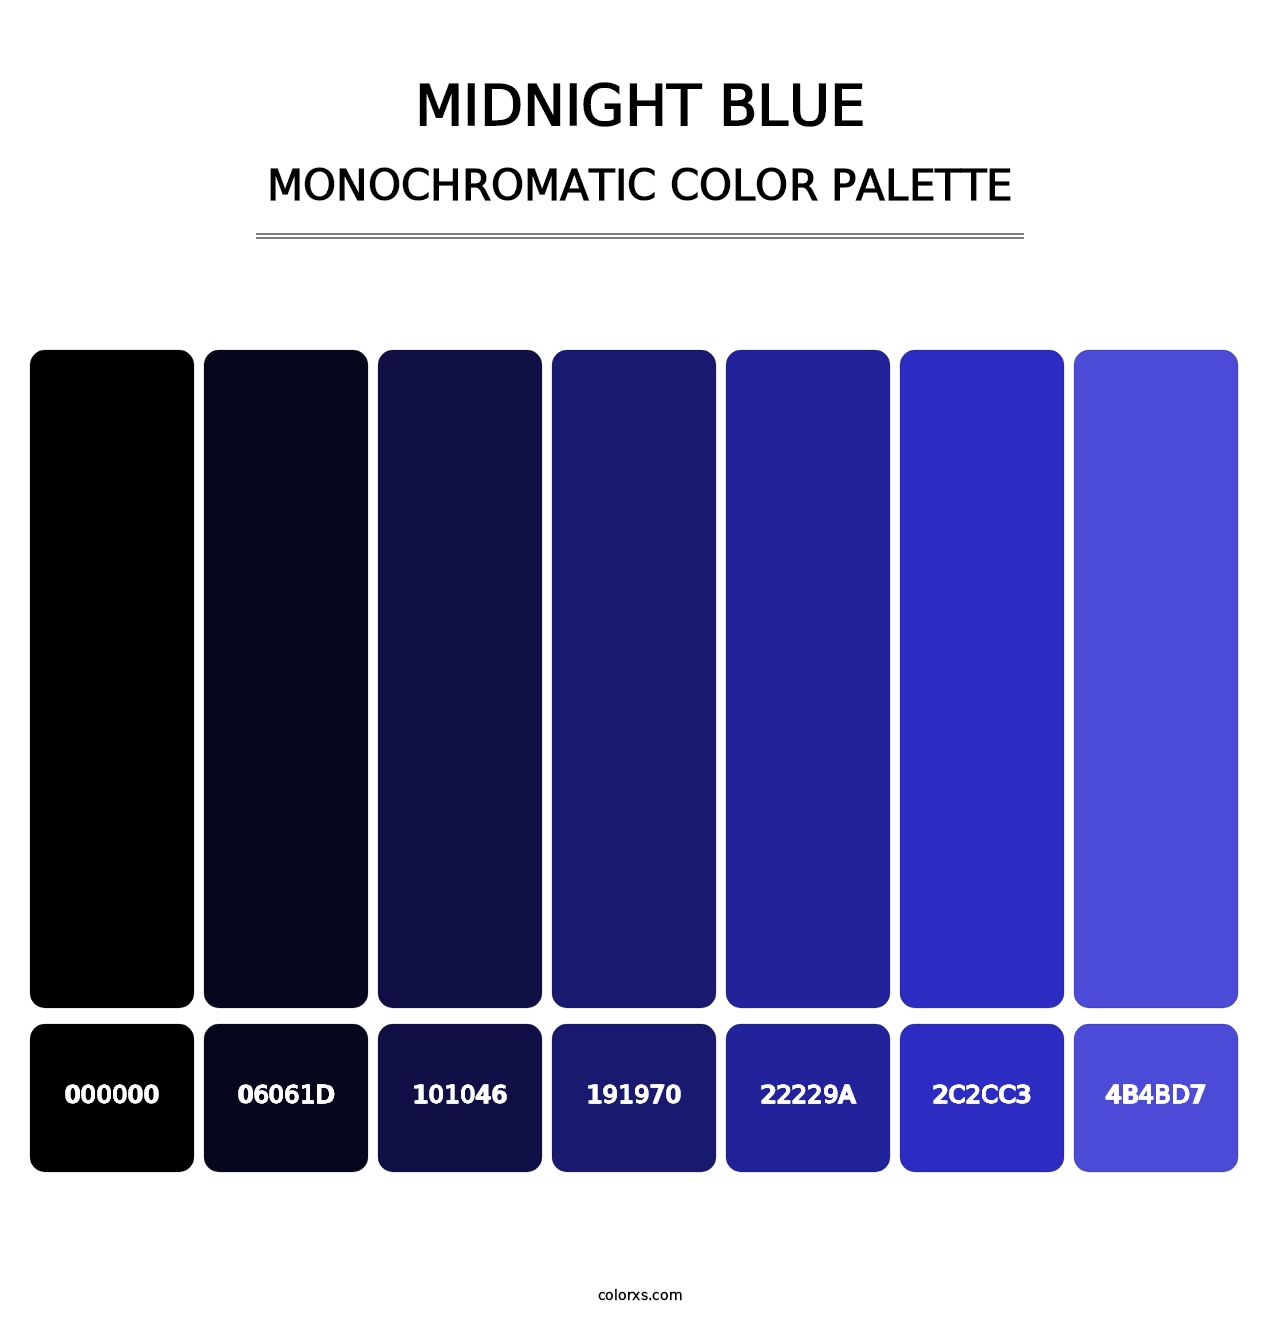 Midnight Blue - Monochromatic Color Palette